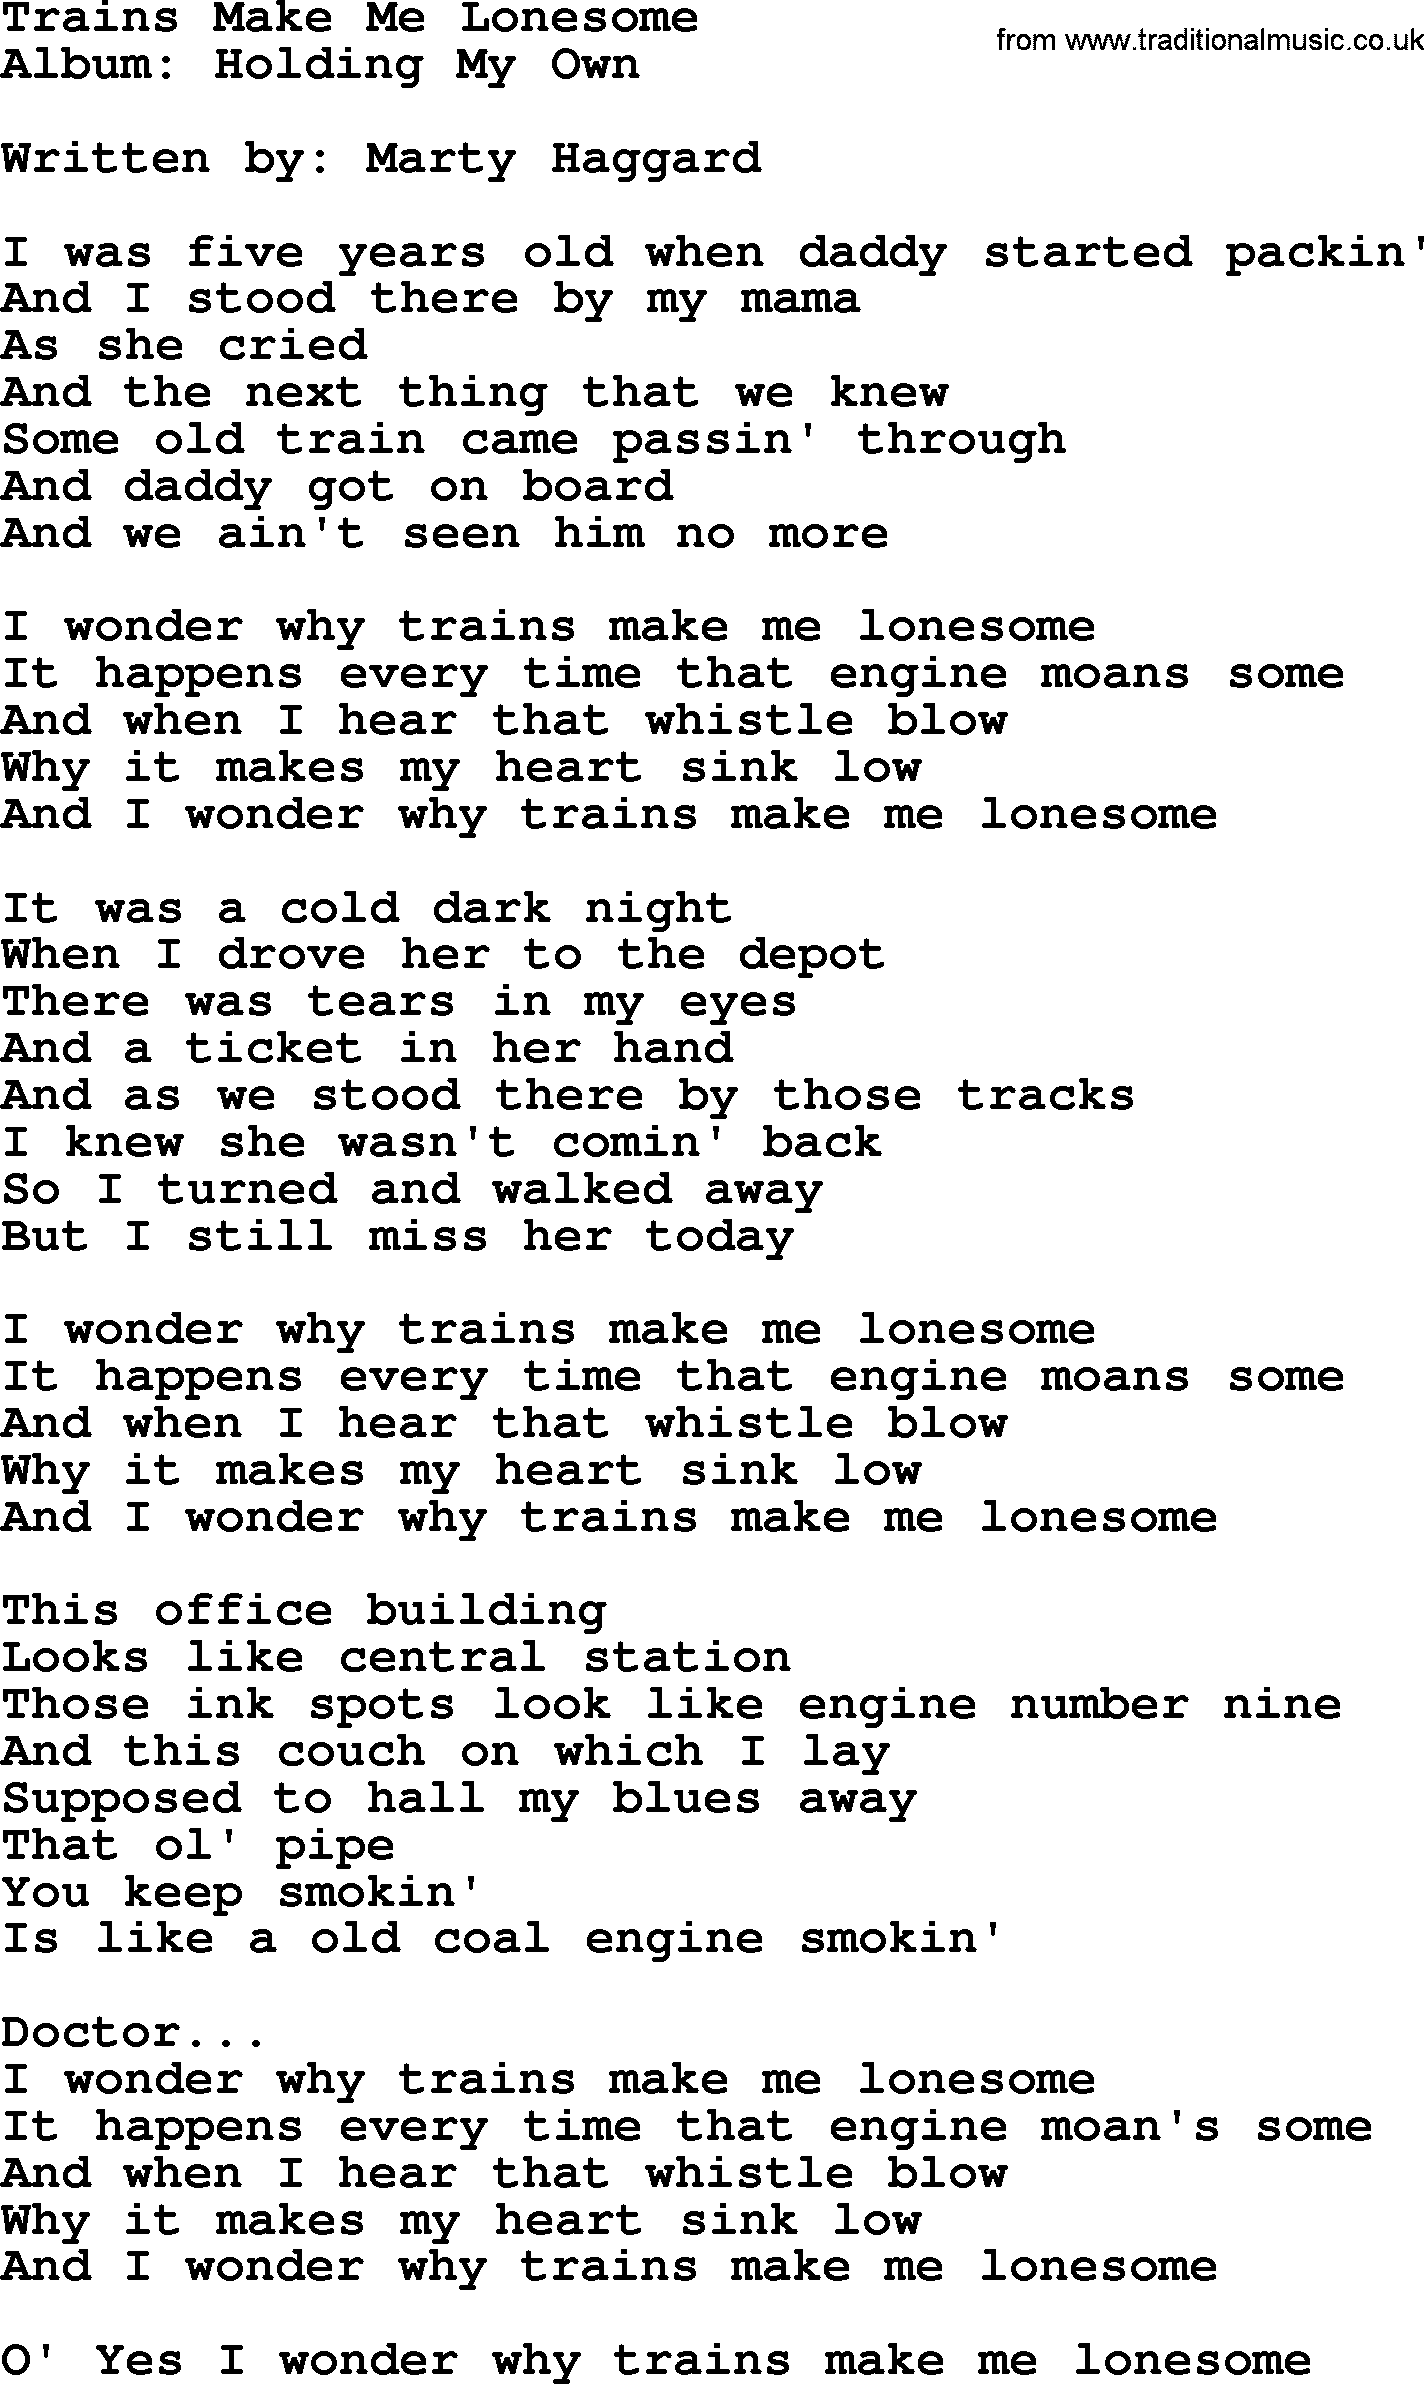 George Strait song: Trains Make Me Lonesome, lyrics